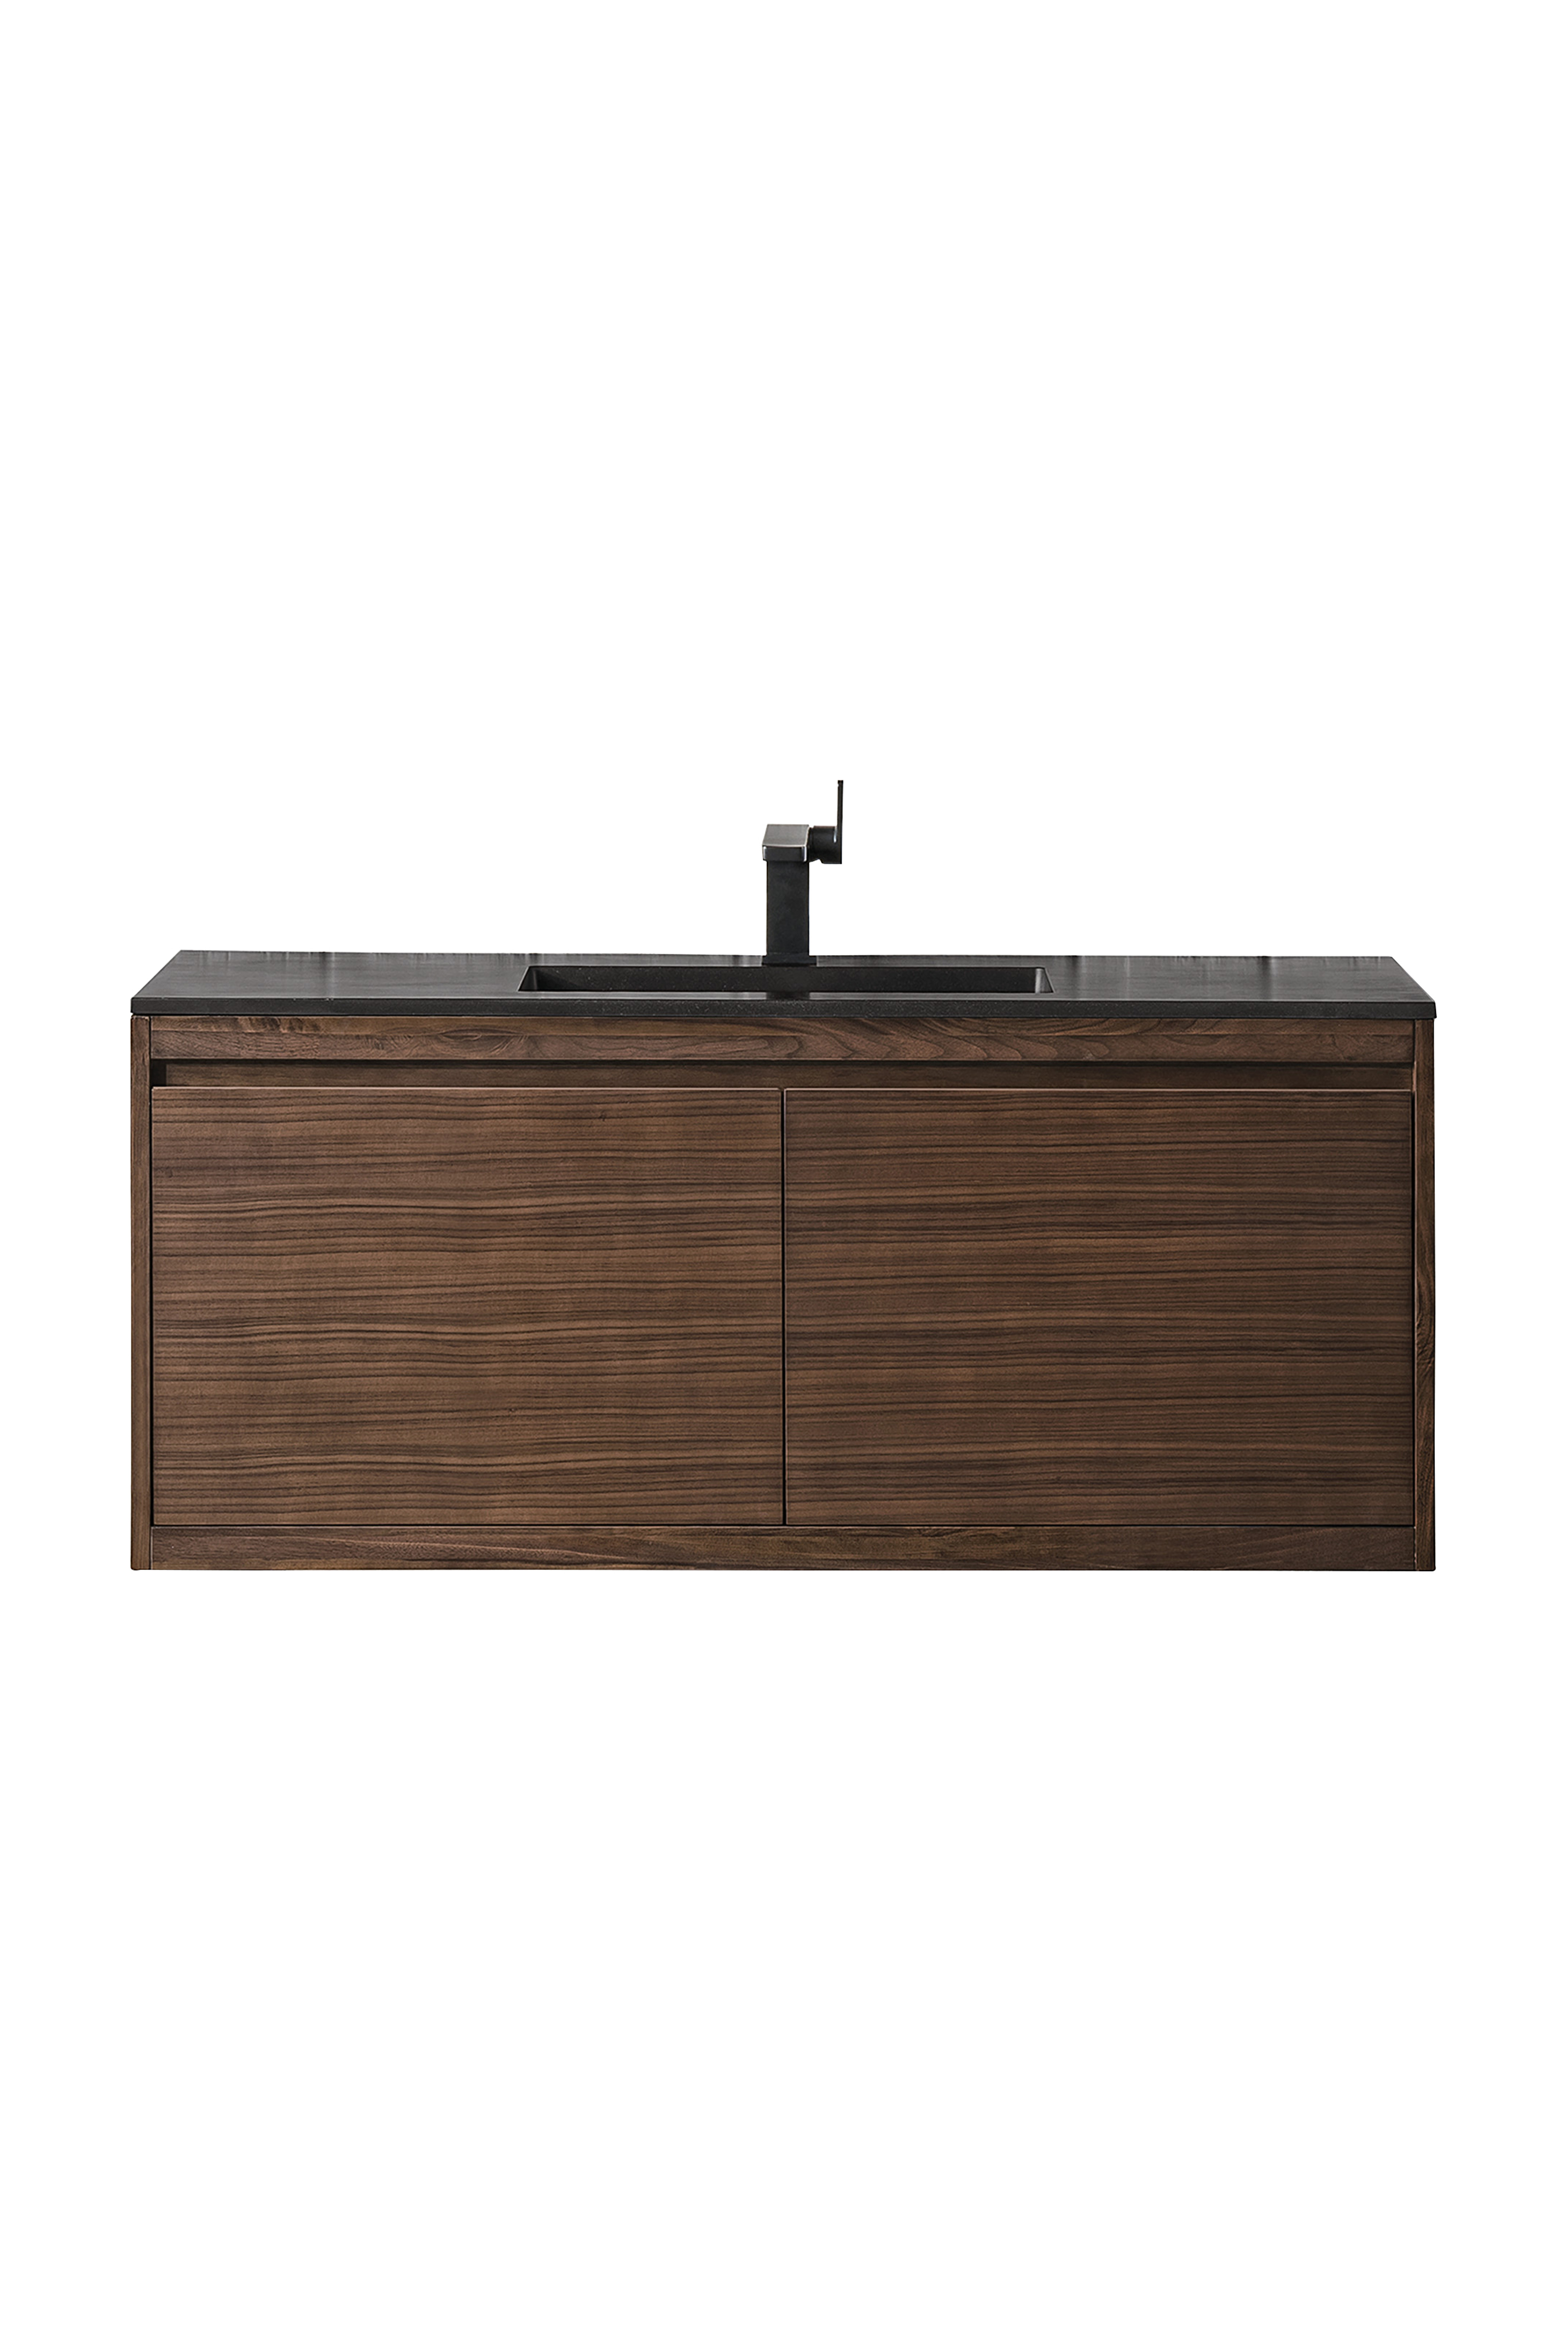 James Martin 801V47.3WLTCHB Milan 47.3" Single Vanity Cabinet, Mid Century Walnut w/Charcoal Black Composite Top